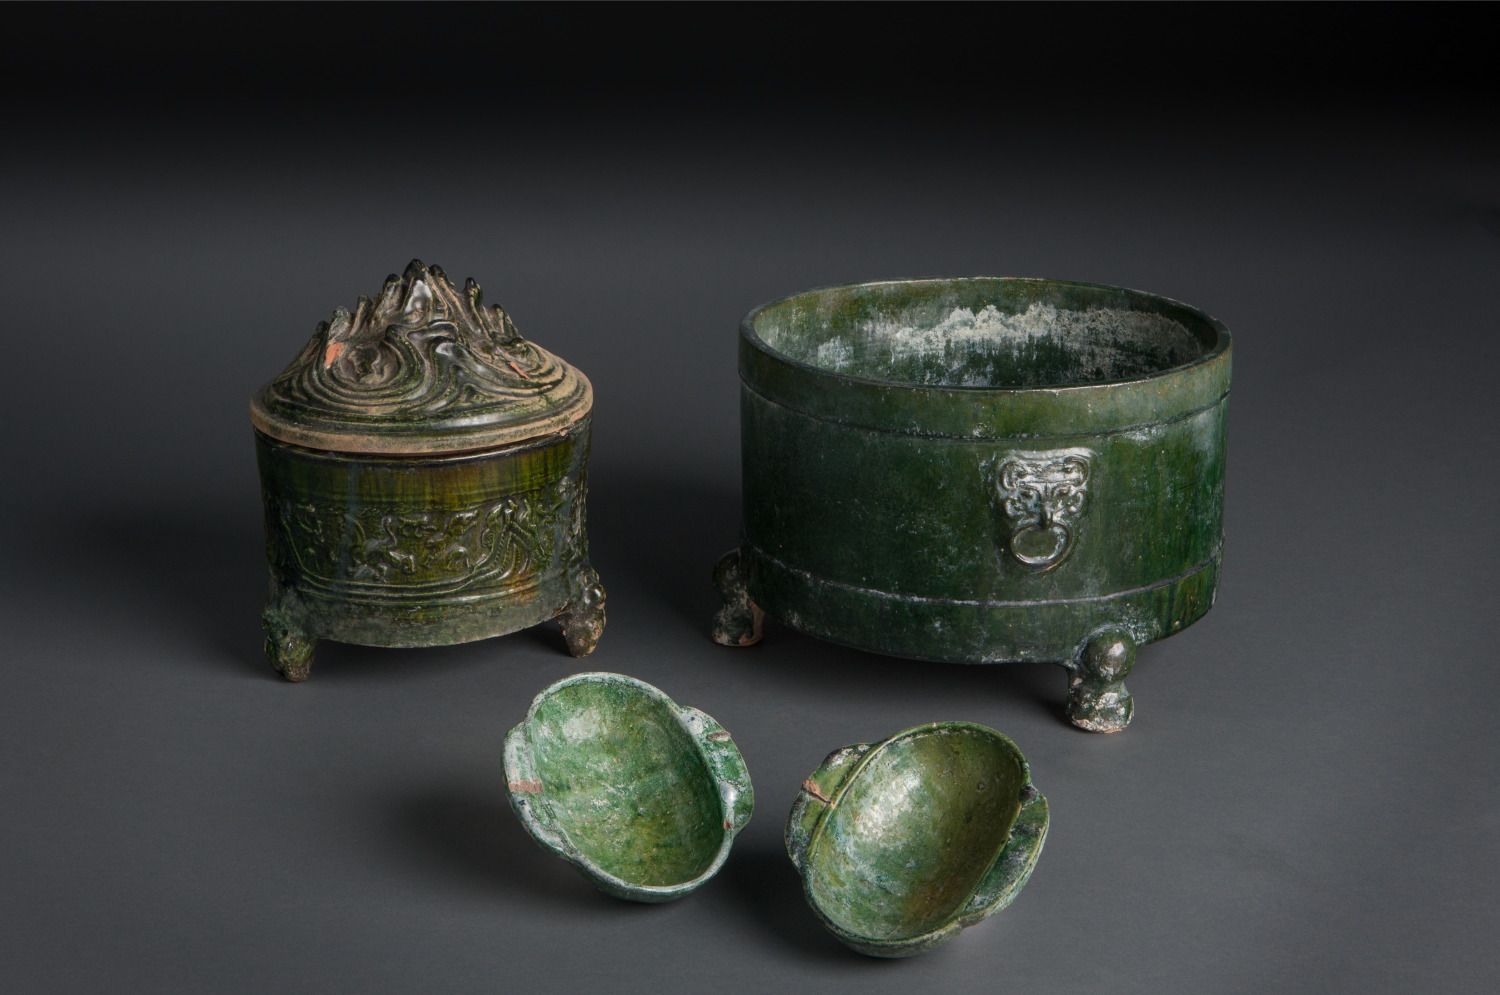 Unknown, Hill censer jar (Vasija para incienco), Han dynasty, 206 B.C.-220 A.D. Glazed stoneware. Gift of Drs. Thomas and Martha Carter.